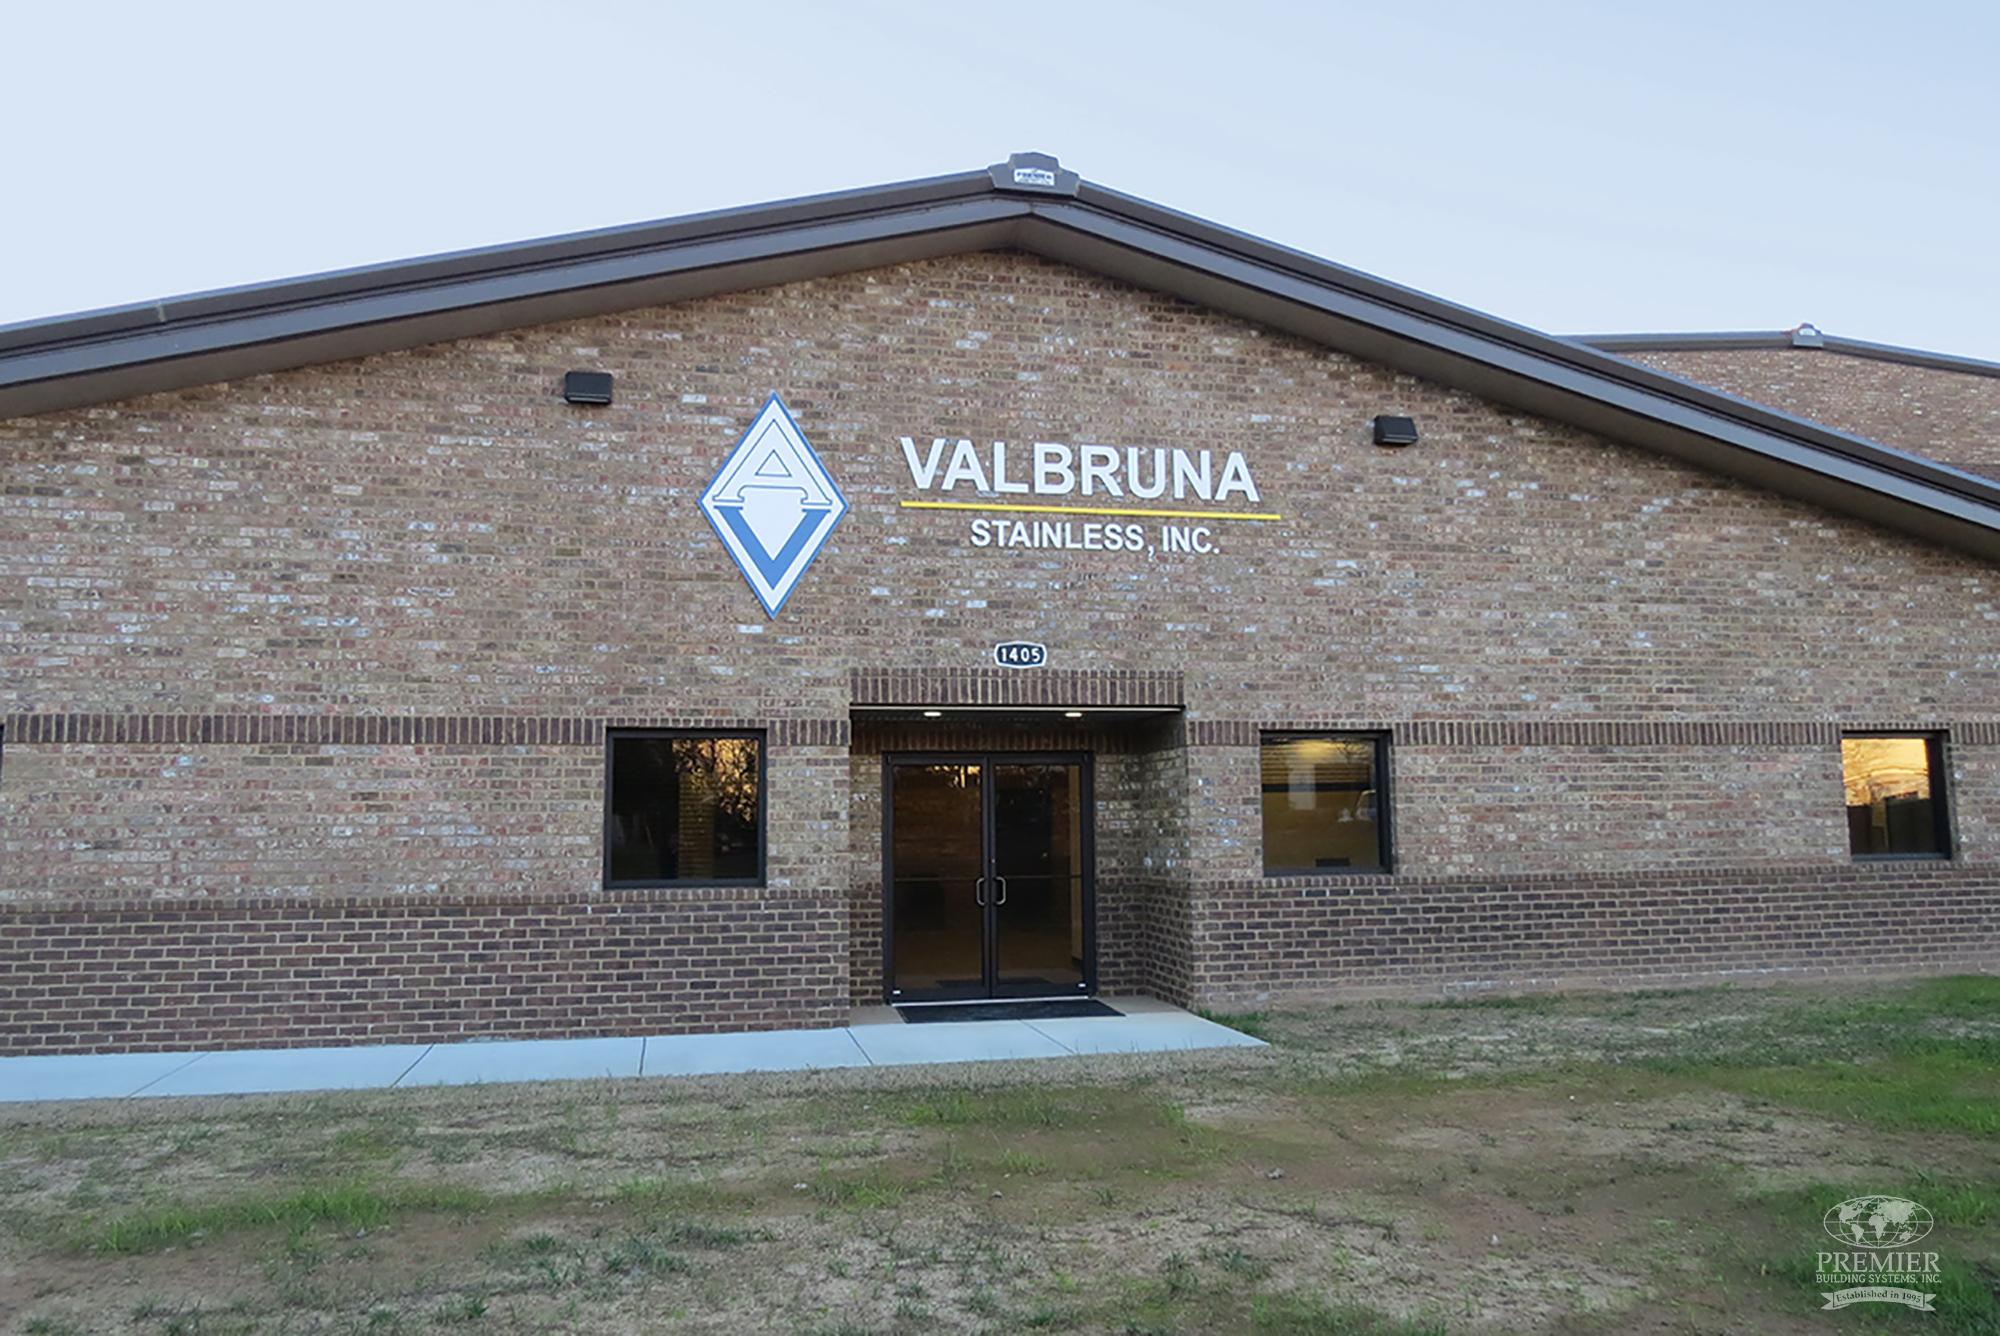 Valbruna Stainless industrial steel building